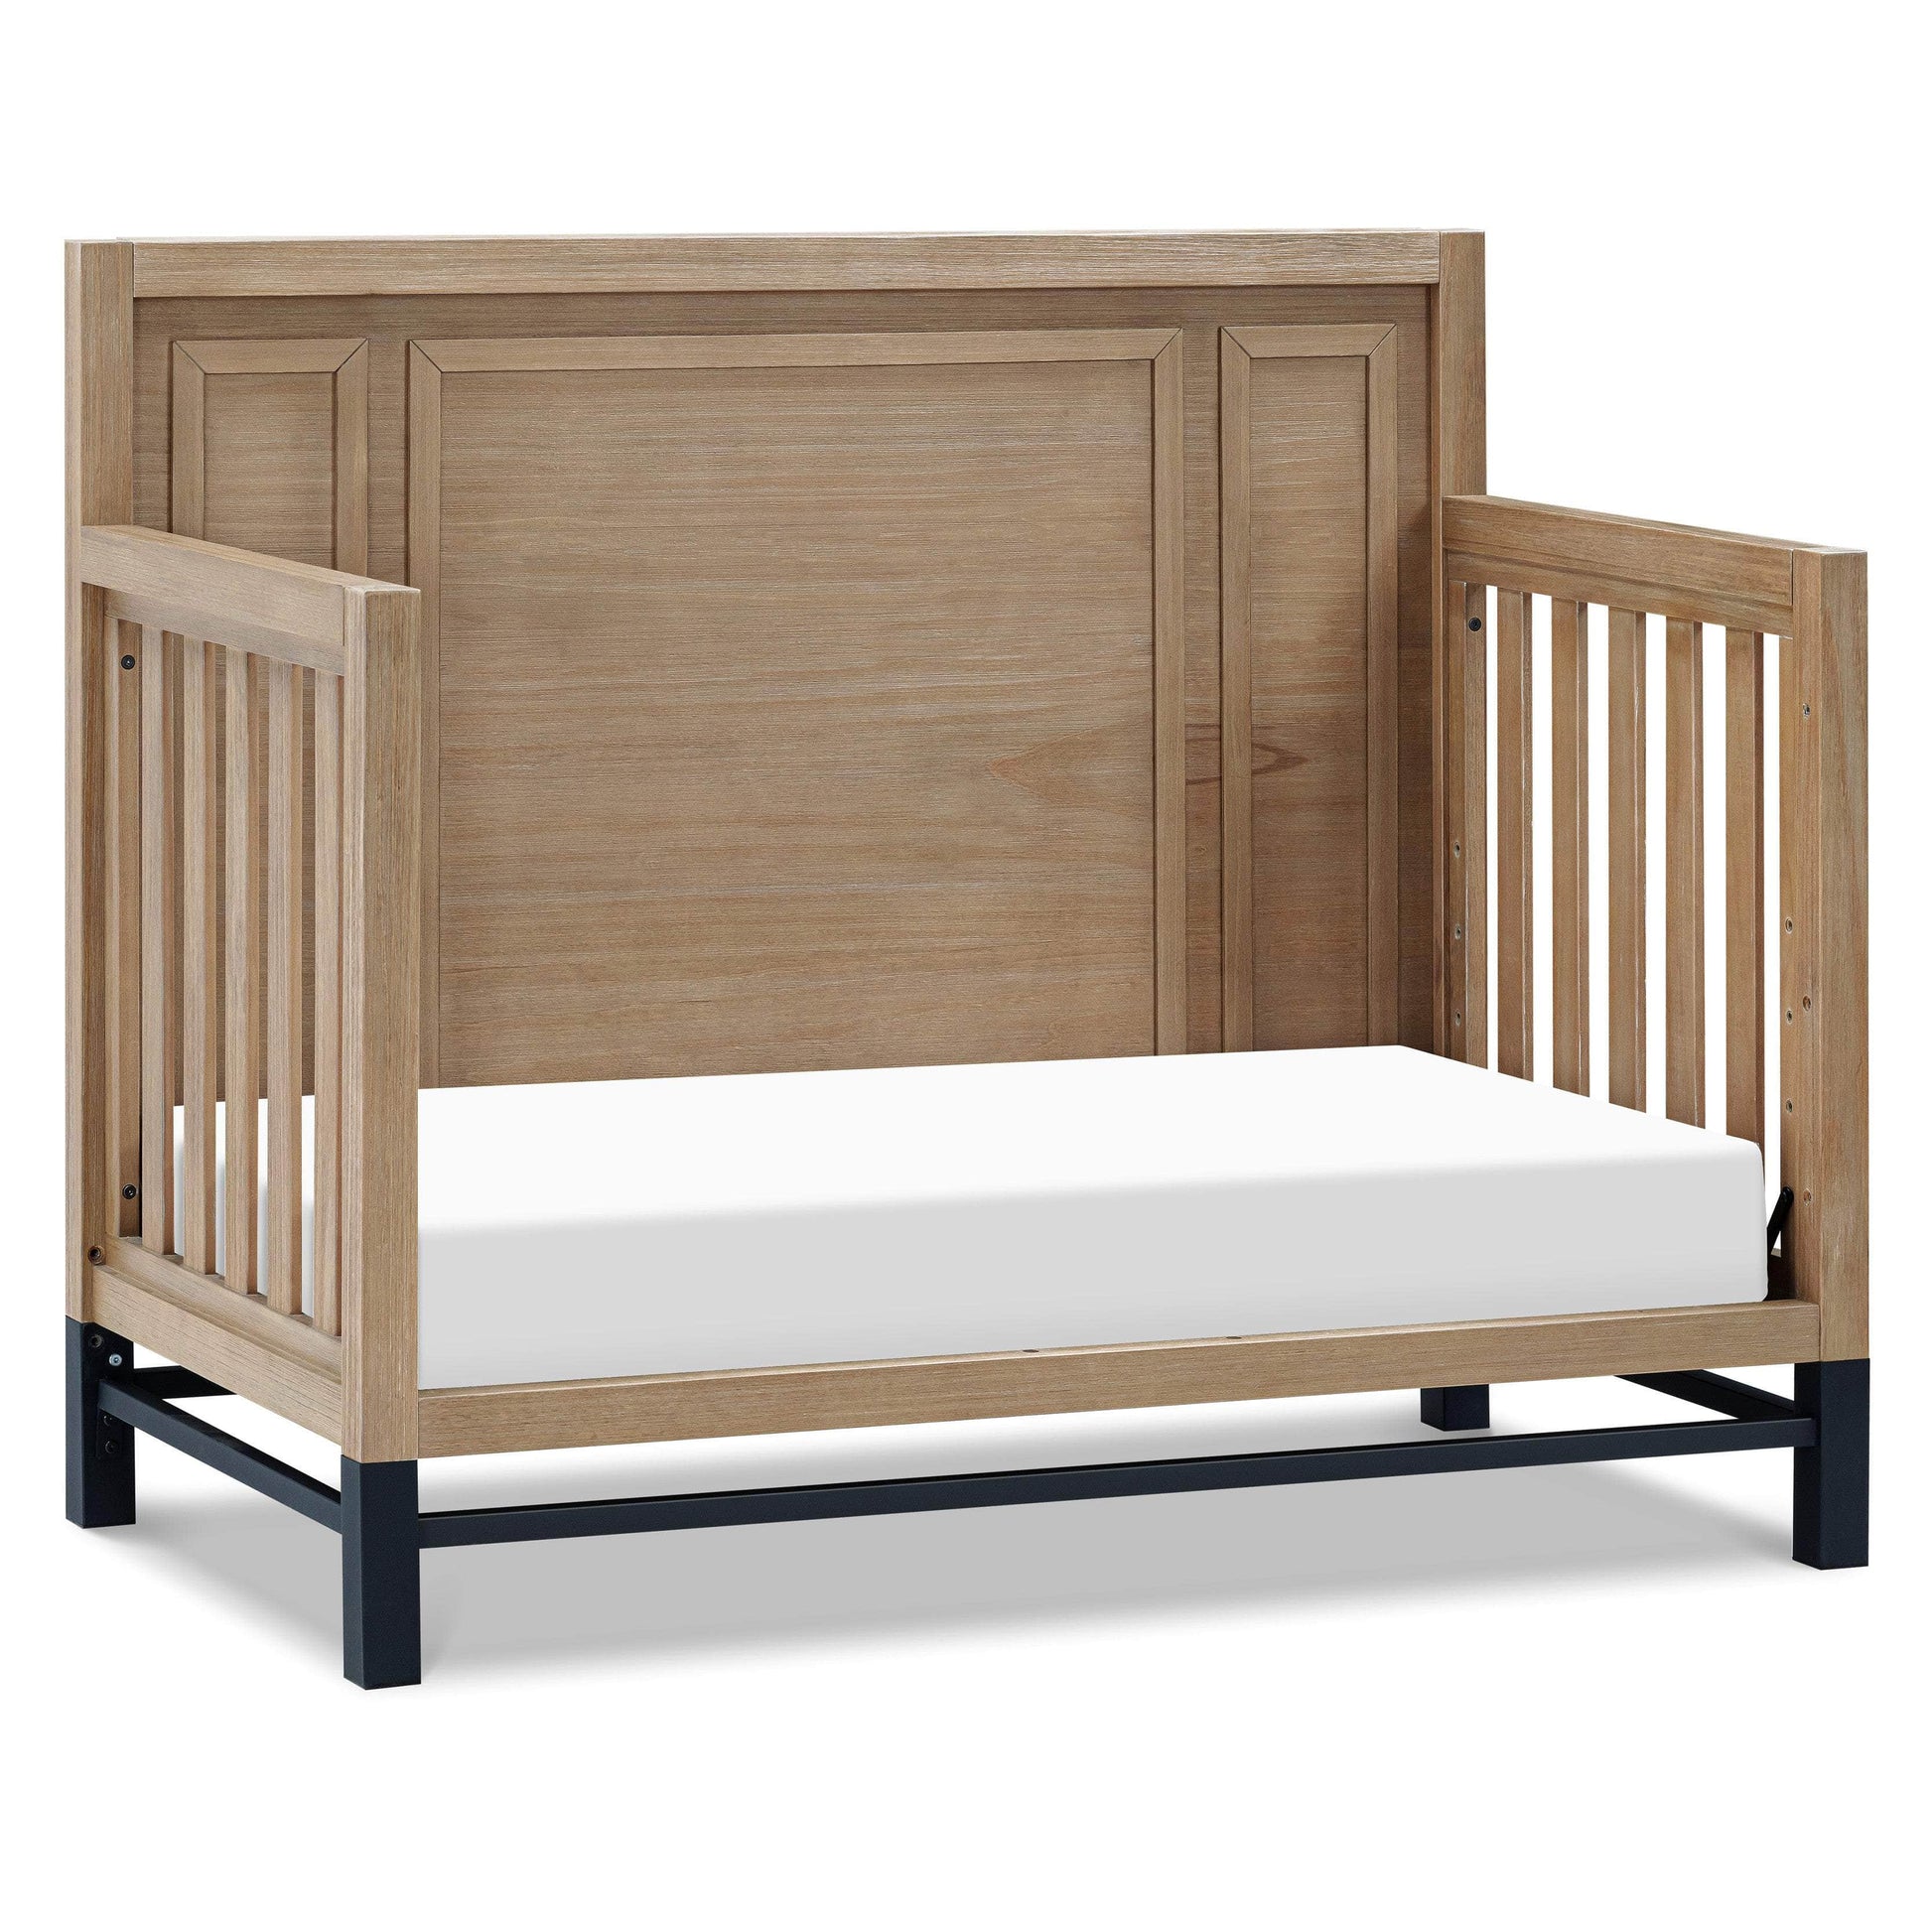 B25801DF,Newbern 4-in-1 Convertible Crib in Driftwood